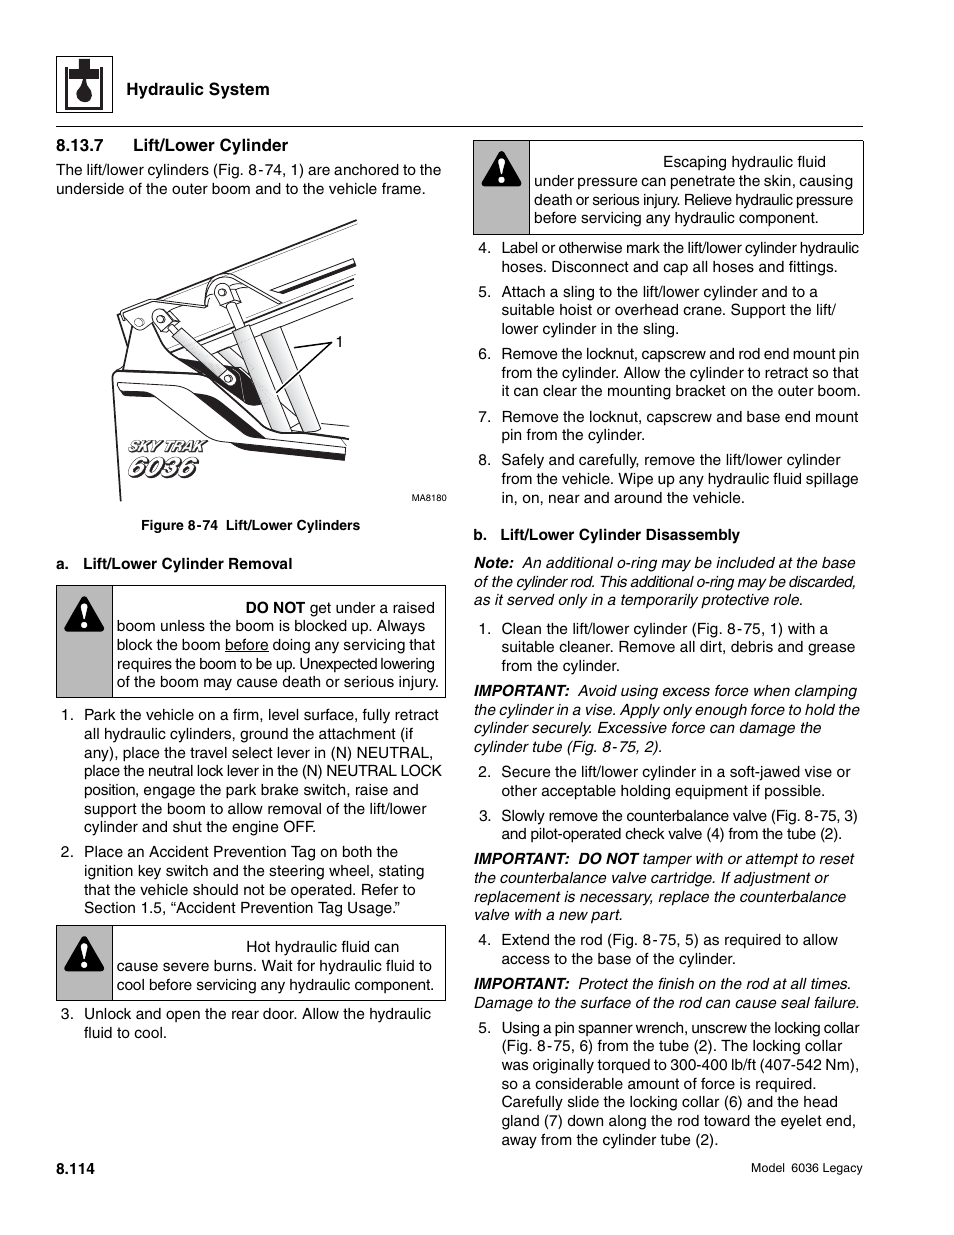 Warning | SkyTrak 6036 Service Manual User Manual | Page 330 / 460